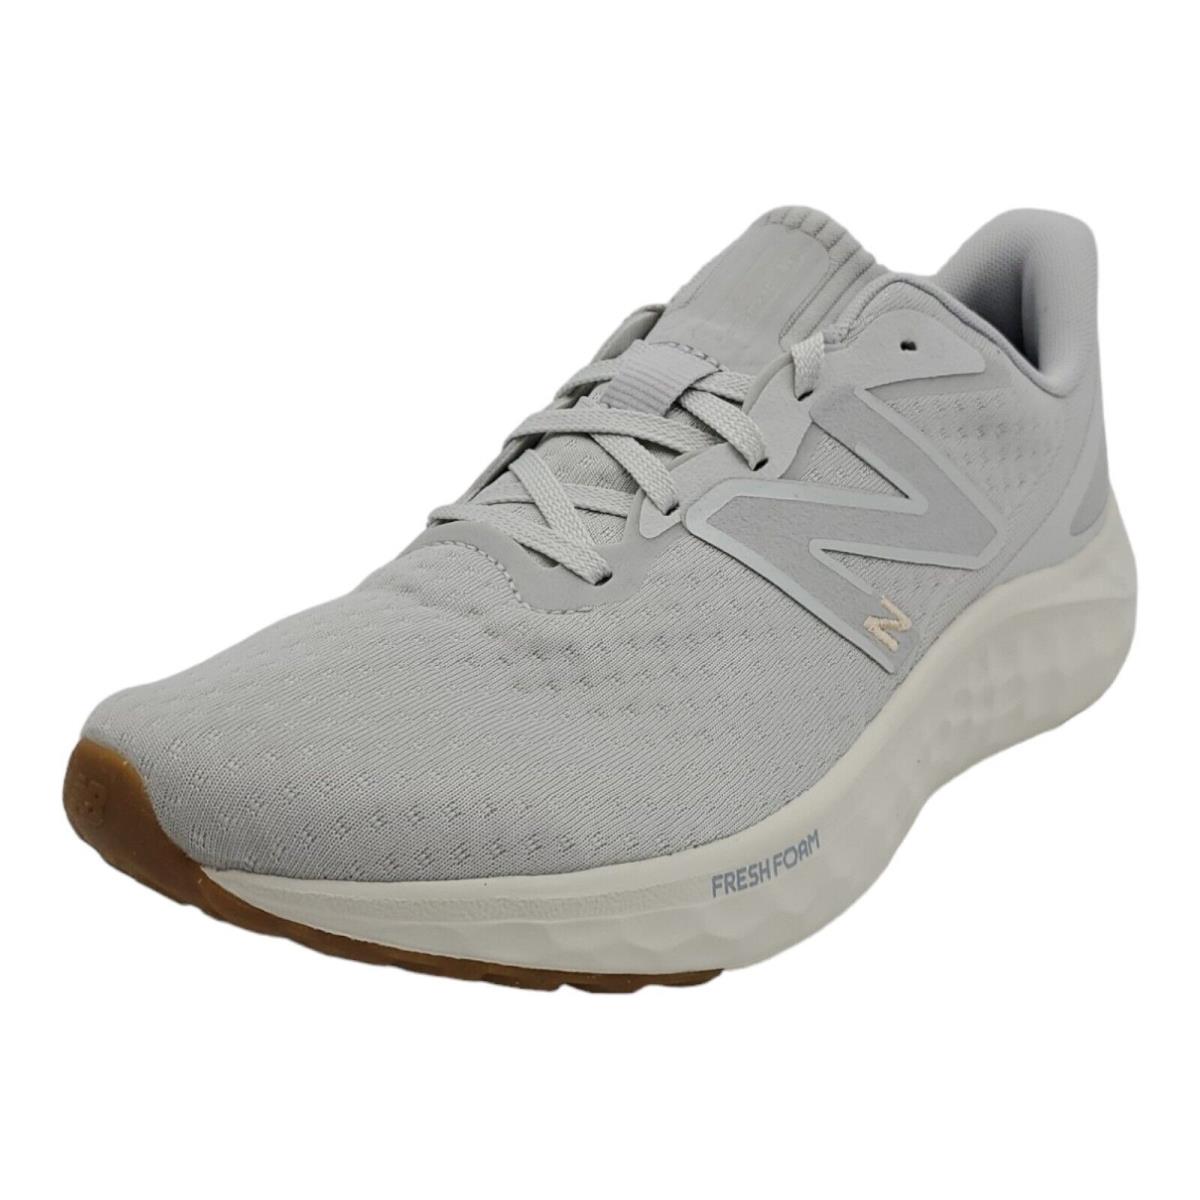 New Balance Fresh Foam Arishi V4 Running Shoes WARISEG4 Women s Size 10 B - Gray